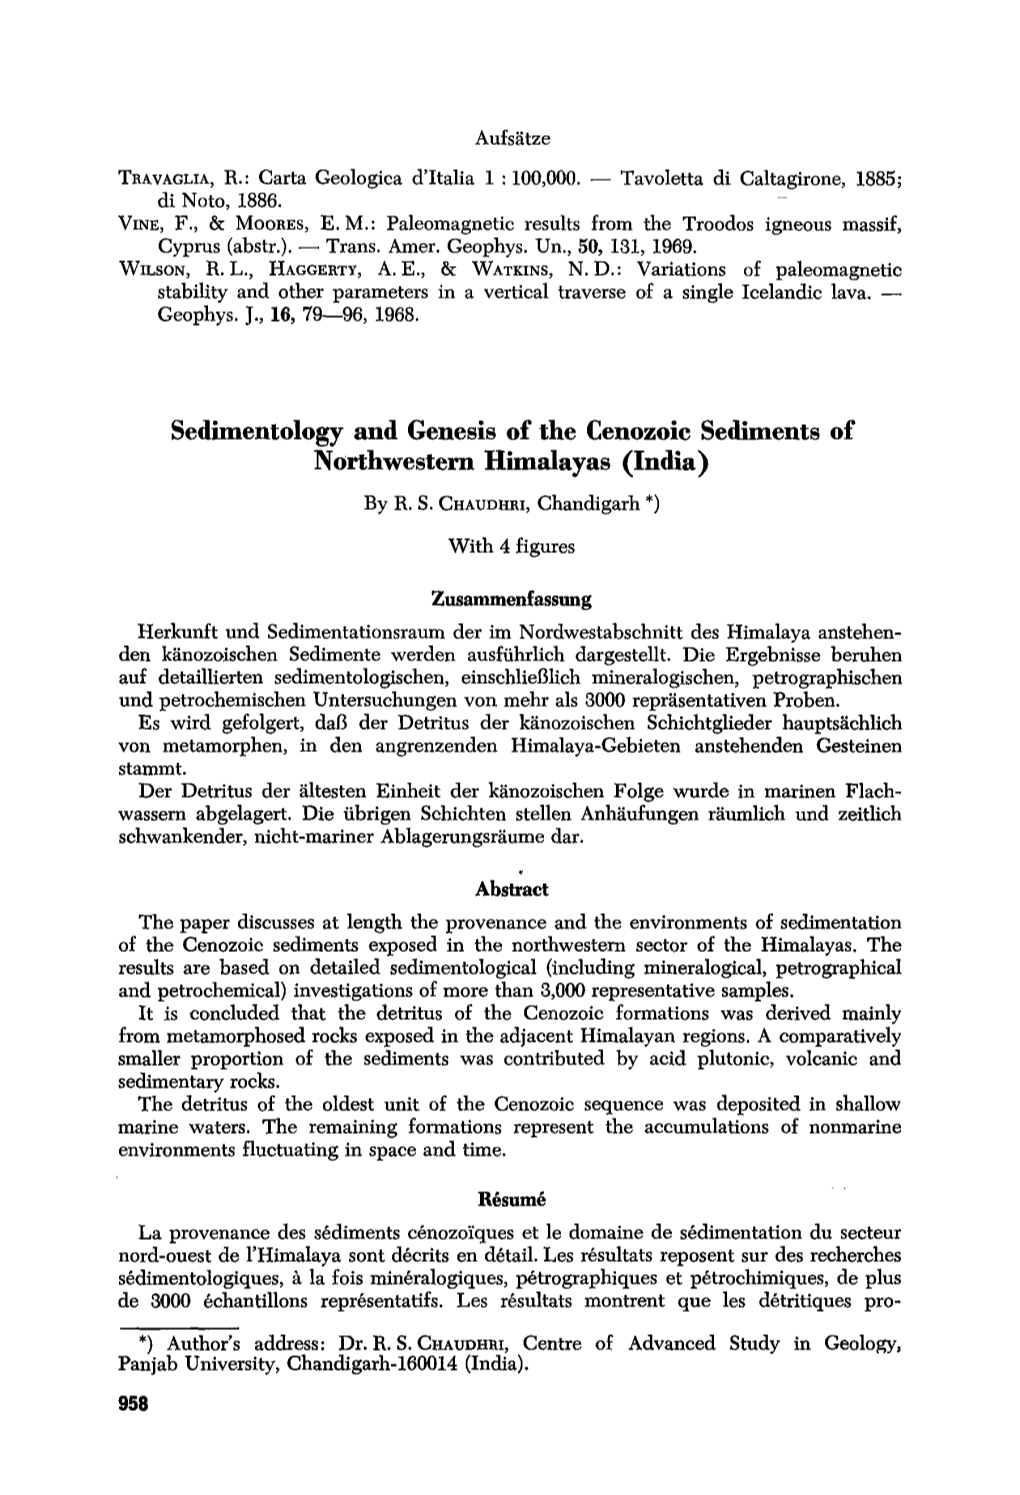 Sedimentology and Genesis of the Cenozoic Sediments of Northwestern Himalayas (India) by R